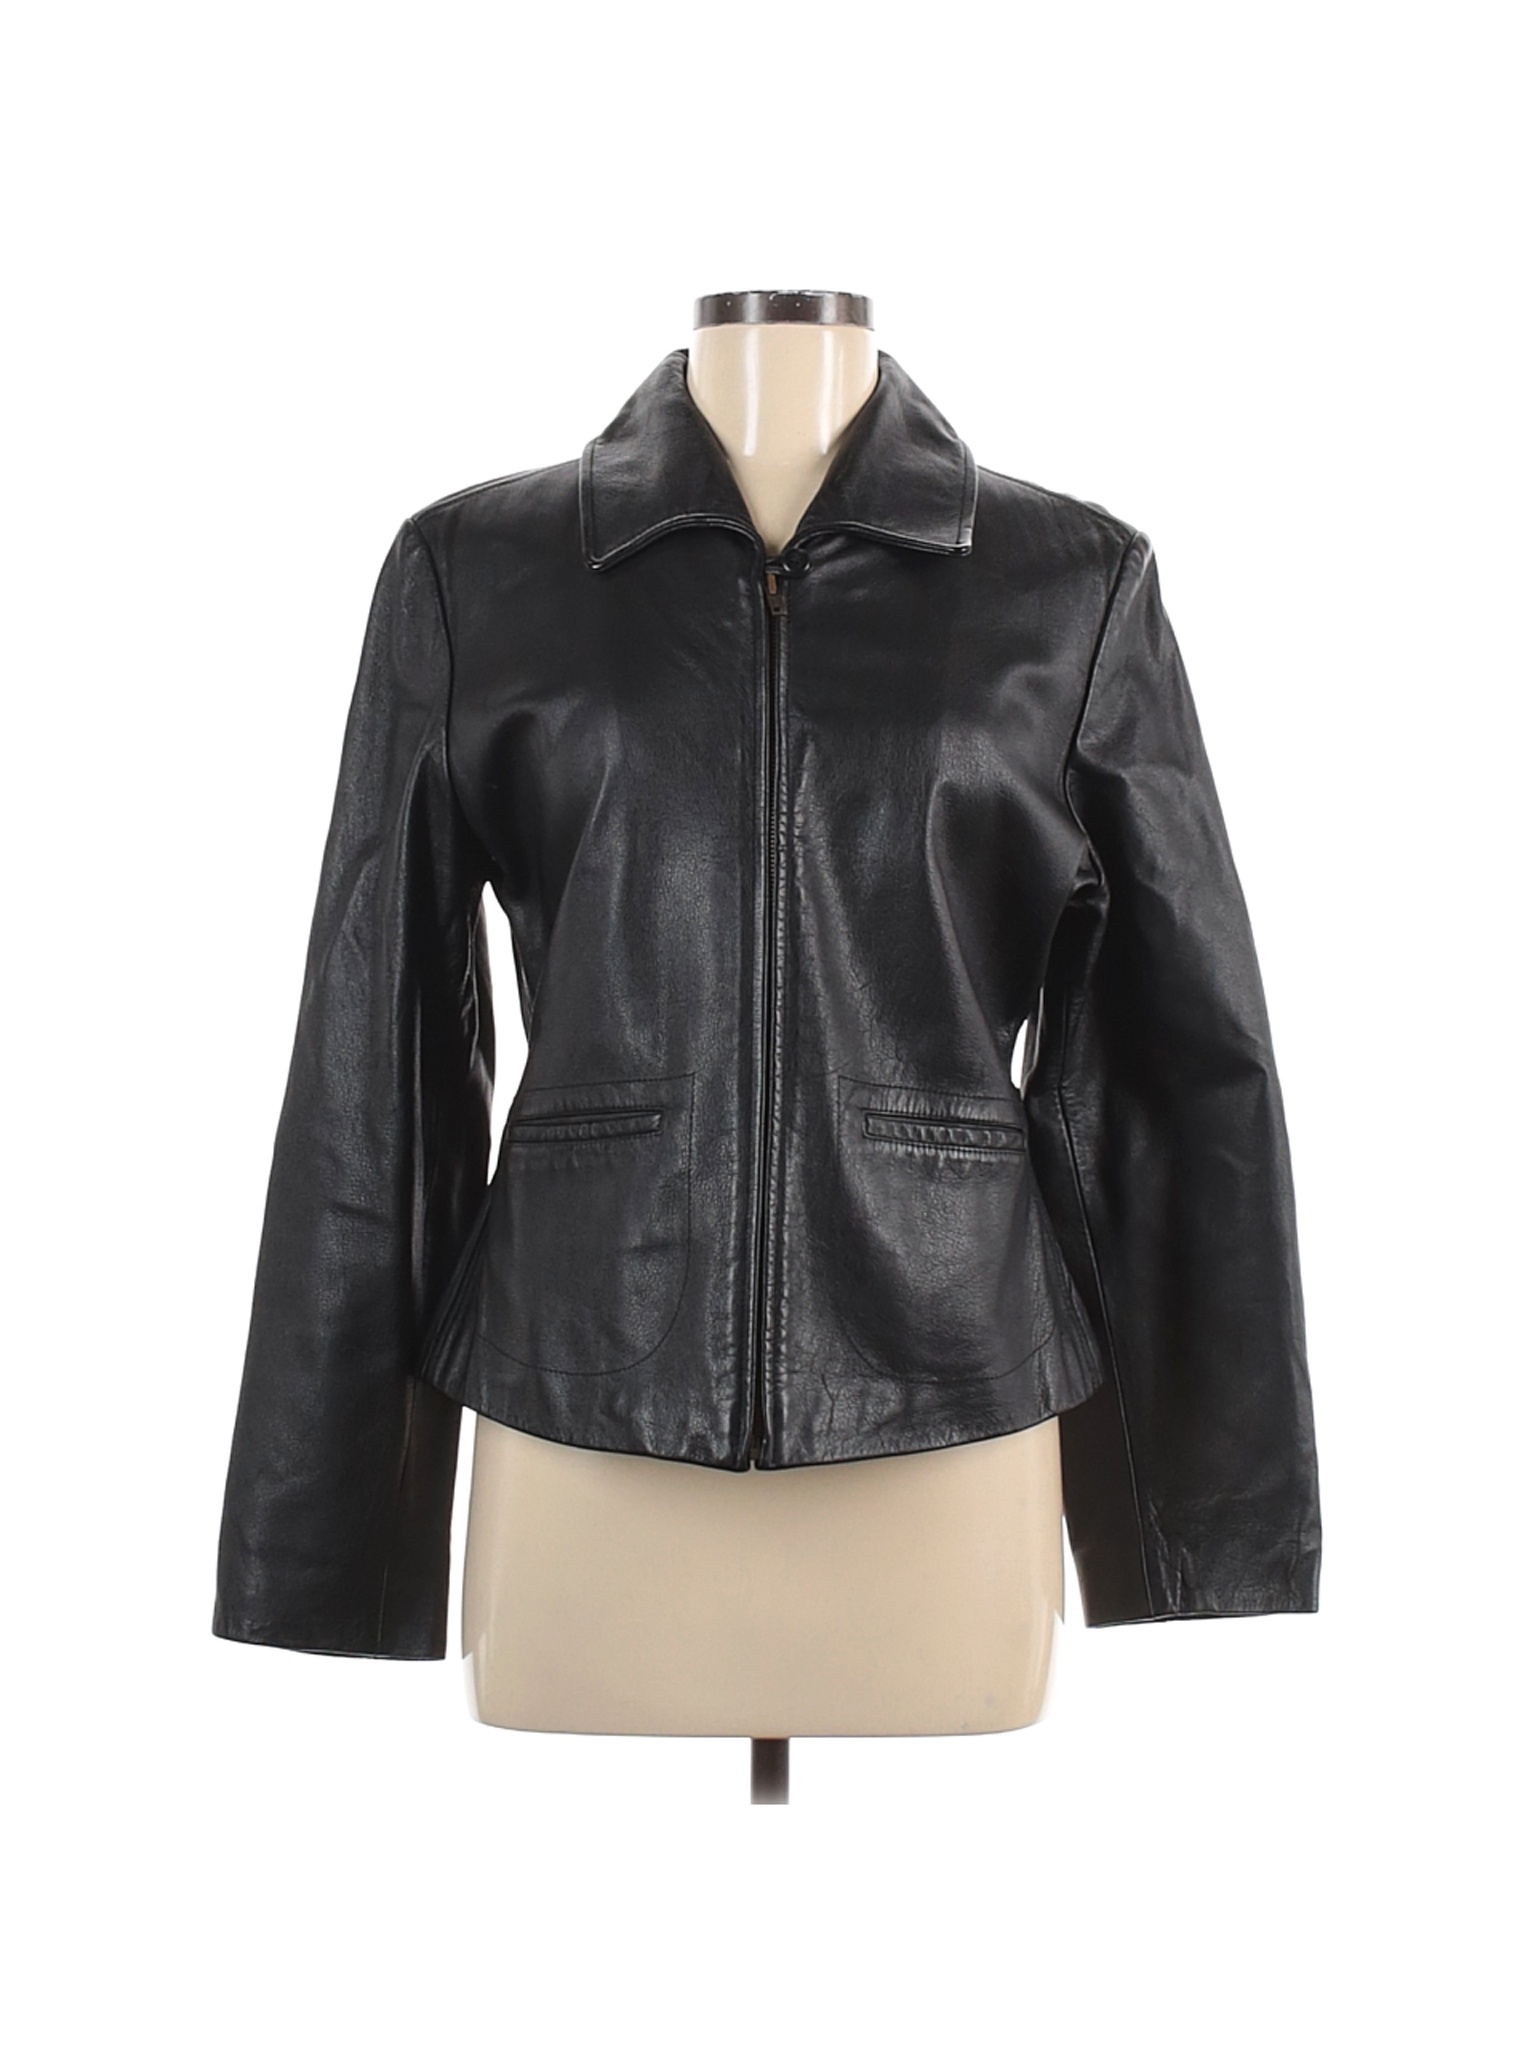 Ann Taylor Women Black Leather Jacket M | eBay